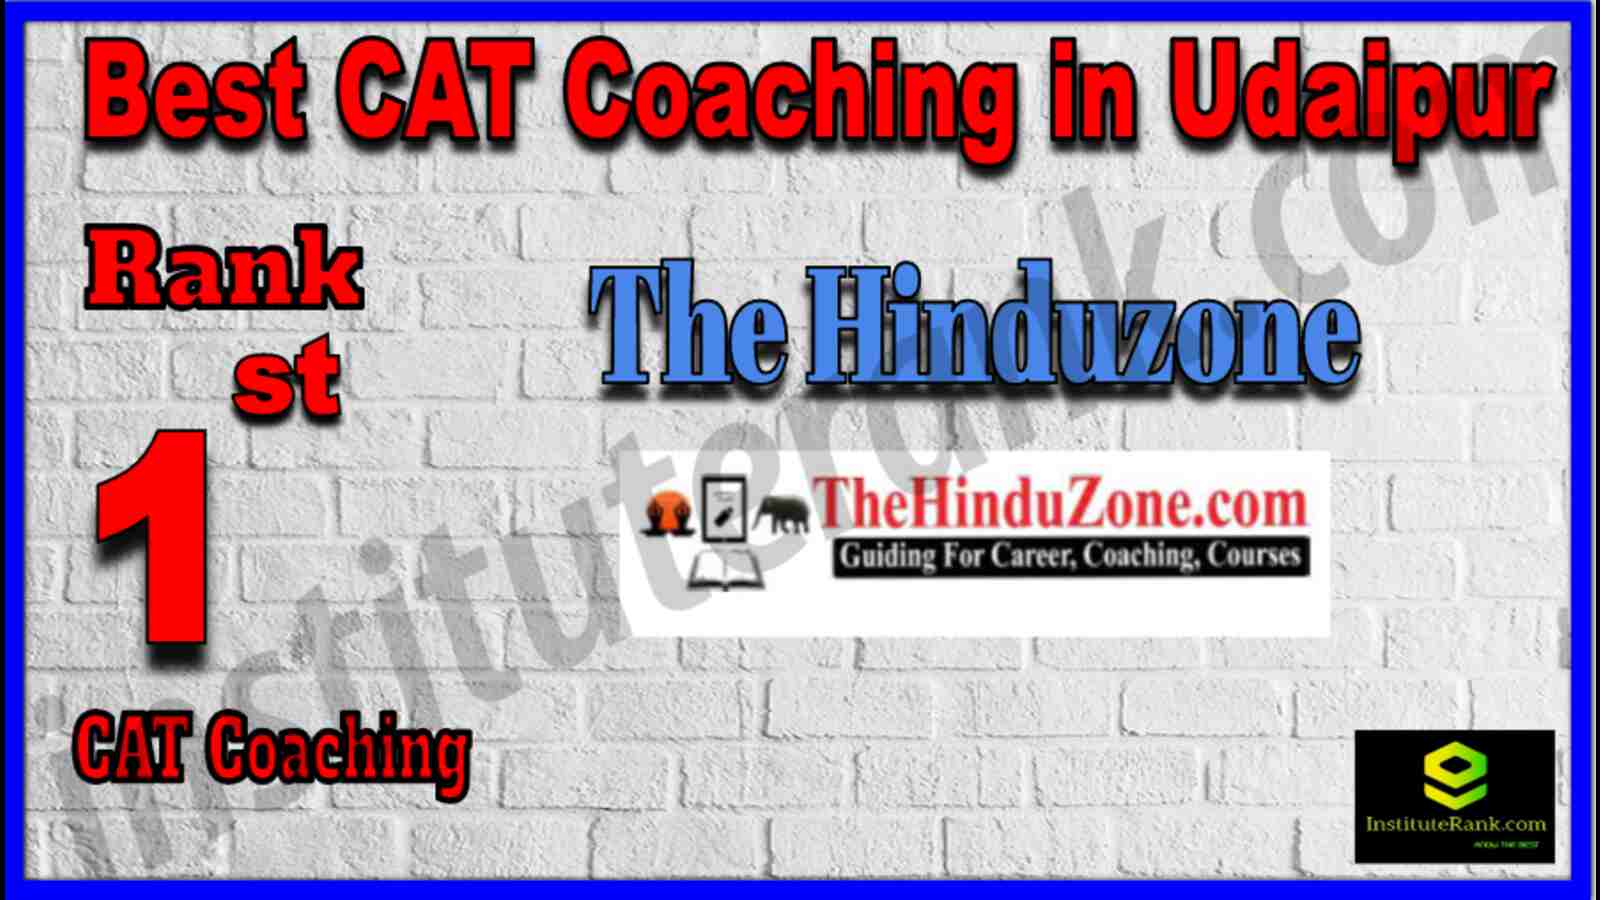 Rank 1 Best CAT Coaching in Udaipur